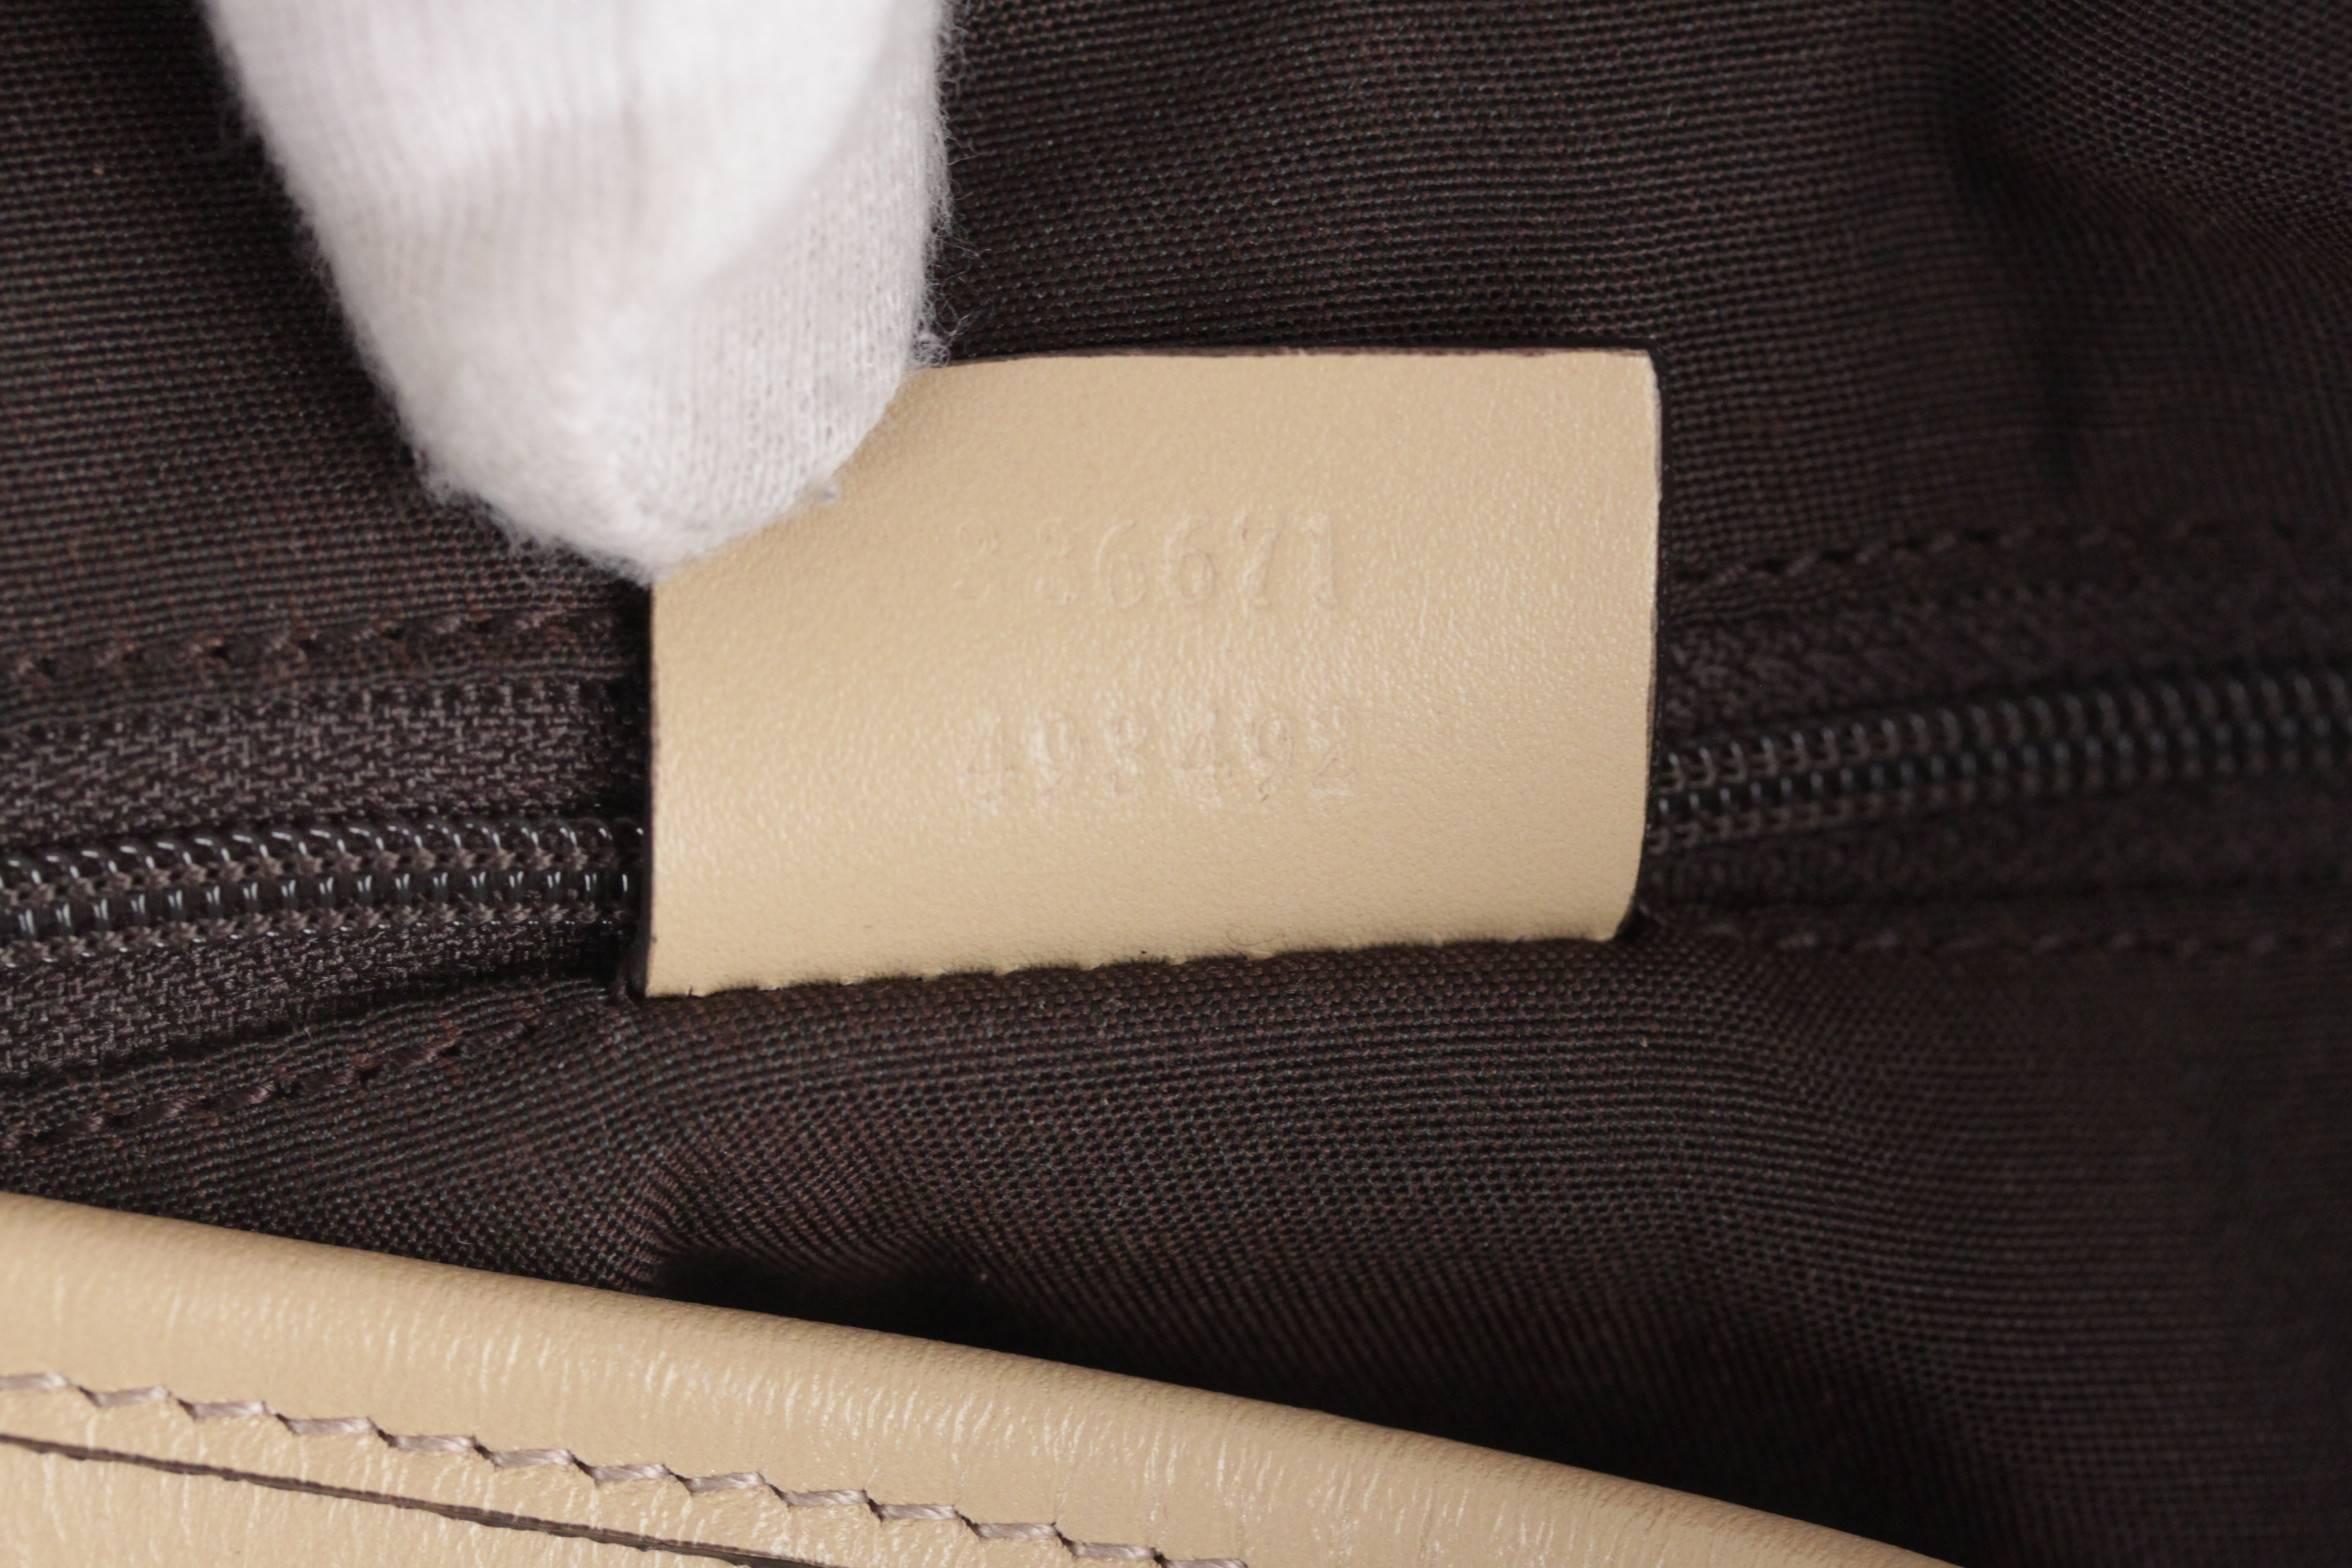 GUCCI Beige Leather SHOPPING BAG Tote Handbag 6